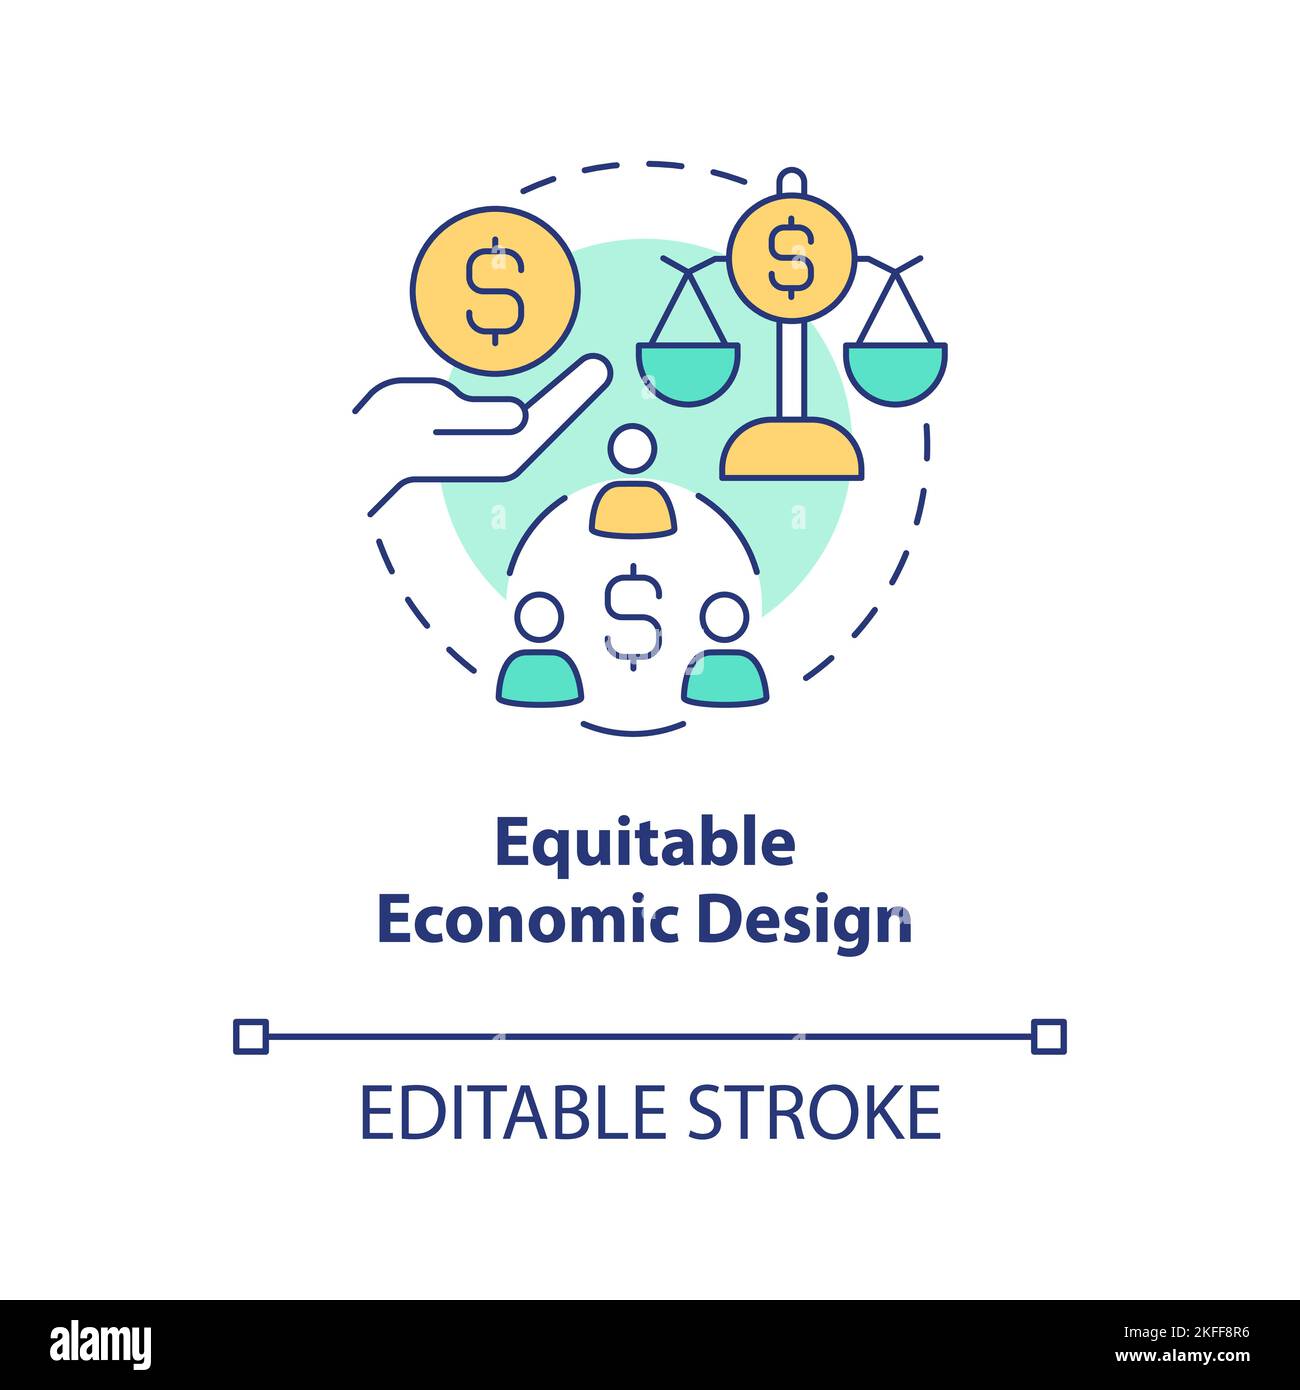 Equitable economic design concept icon Stock Vector